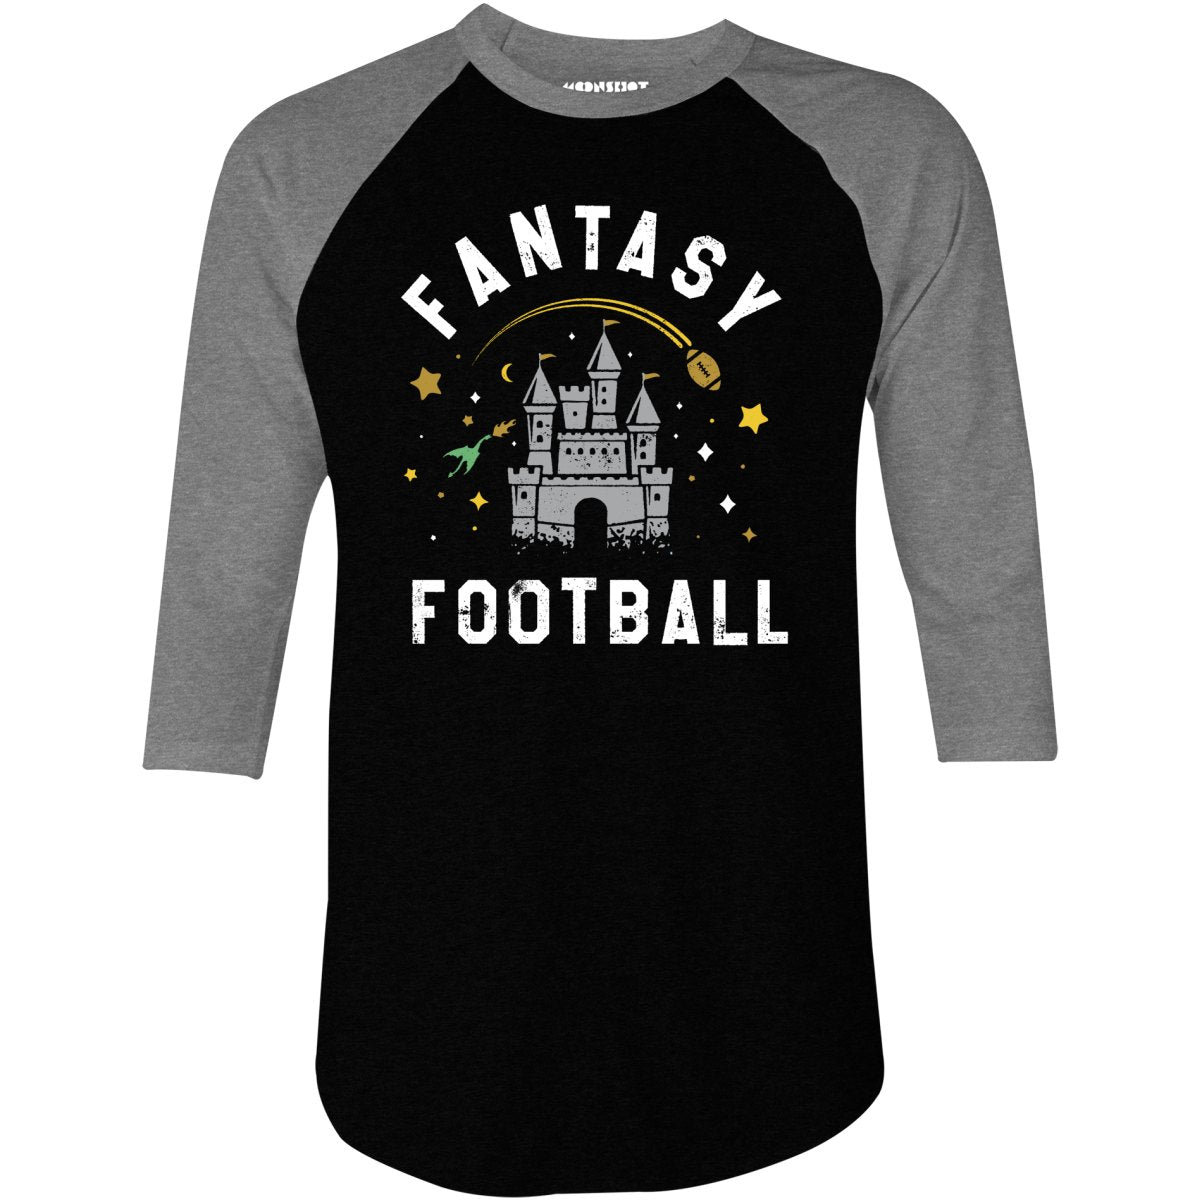 Fantasy Football - 3/4 Sleeve Raglan T-Shirt